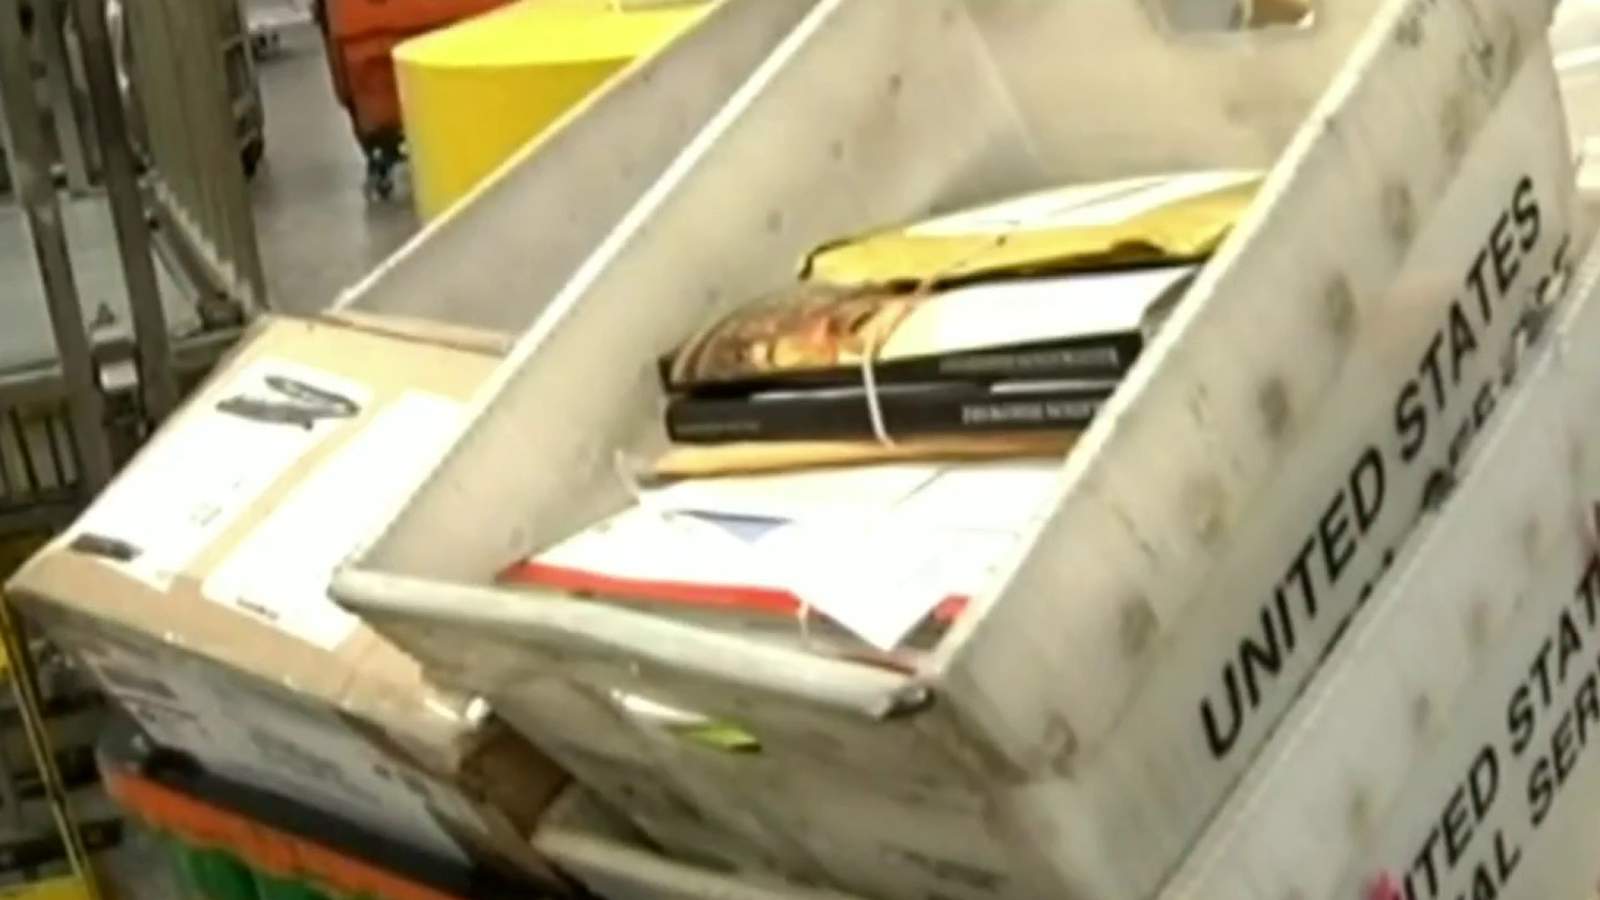 Michigan lawmaker begins investigation into US Postal Service due to mail delays